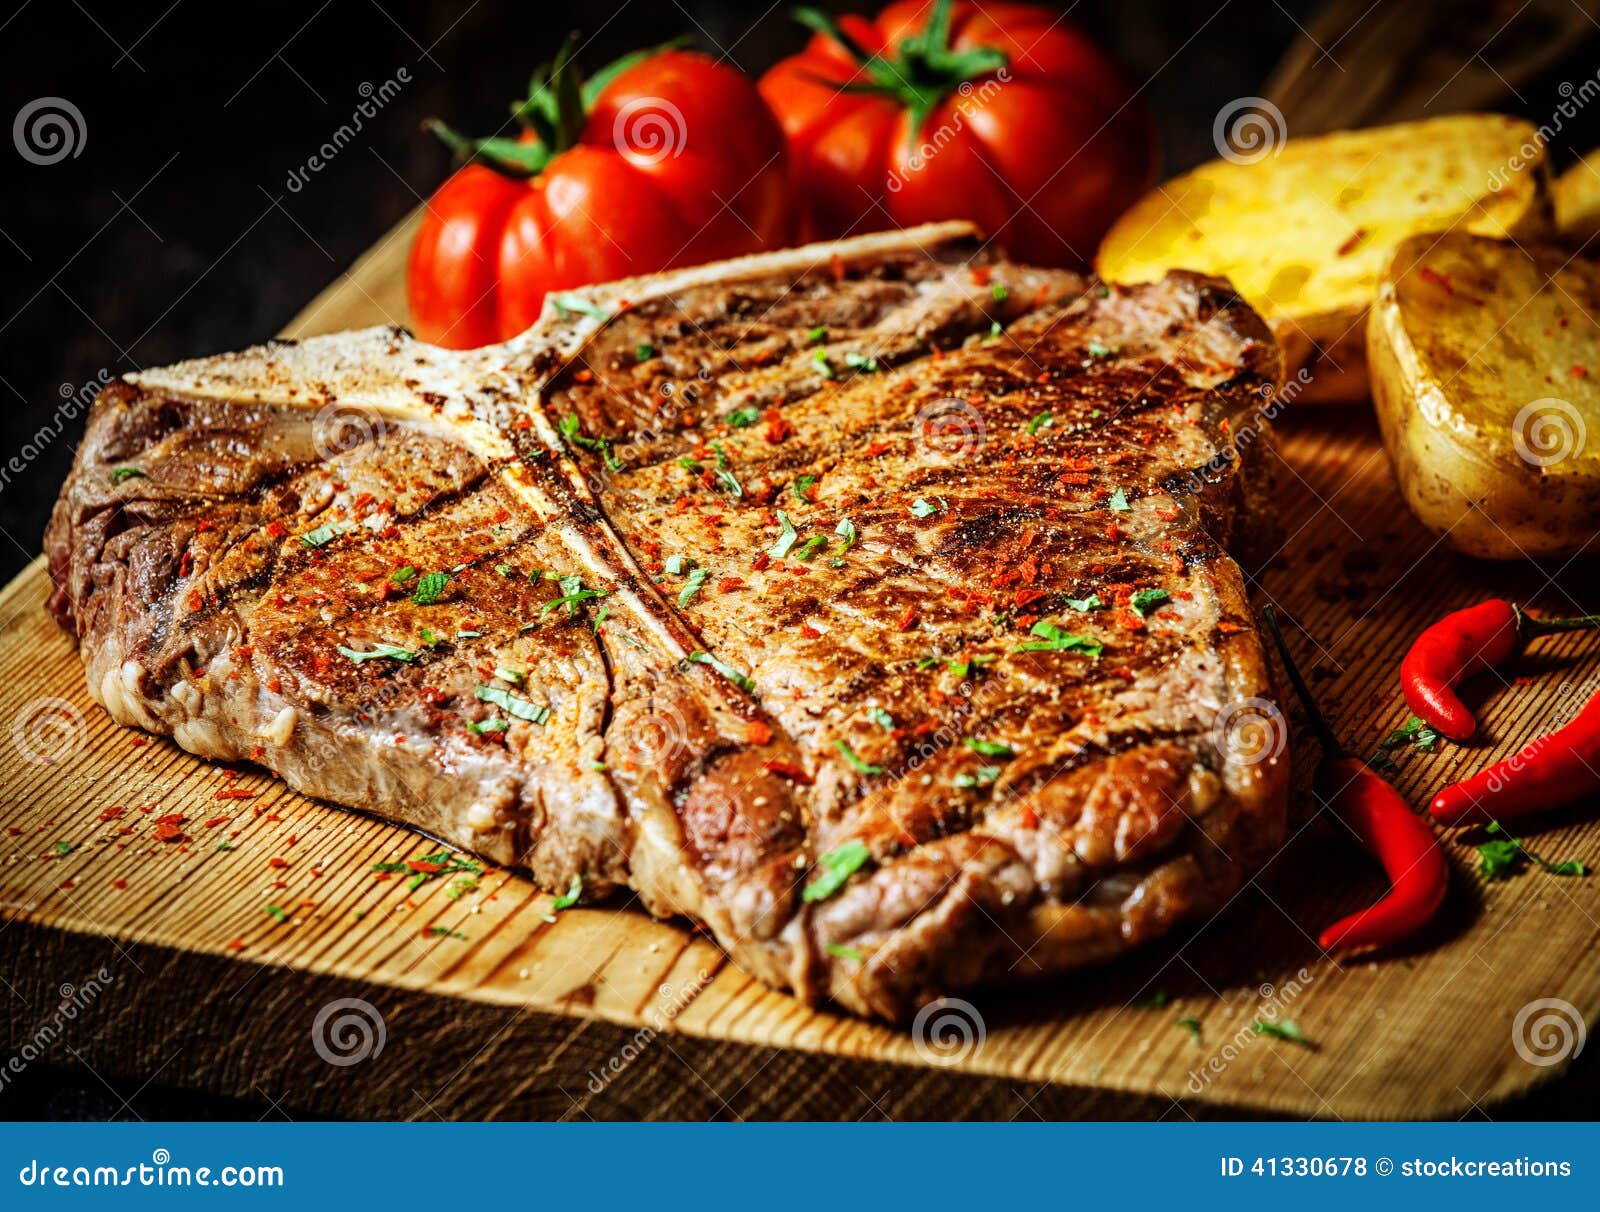 grilled t-bone steak with vegetables